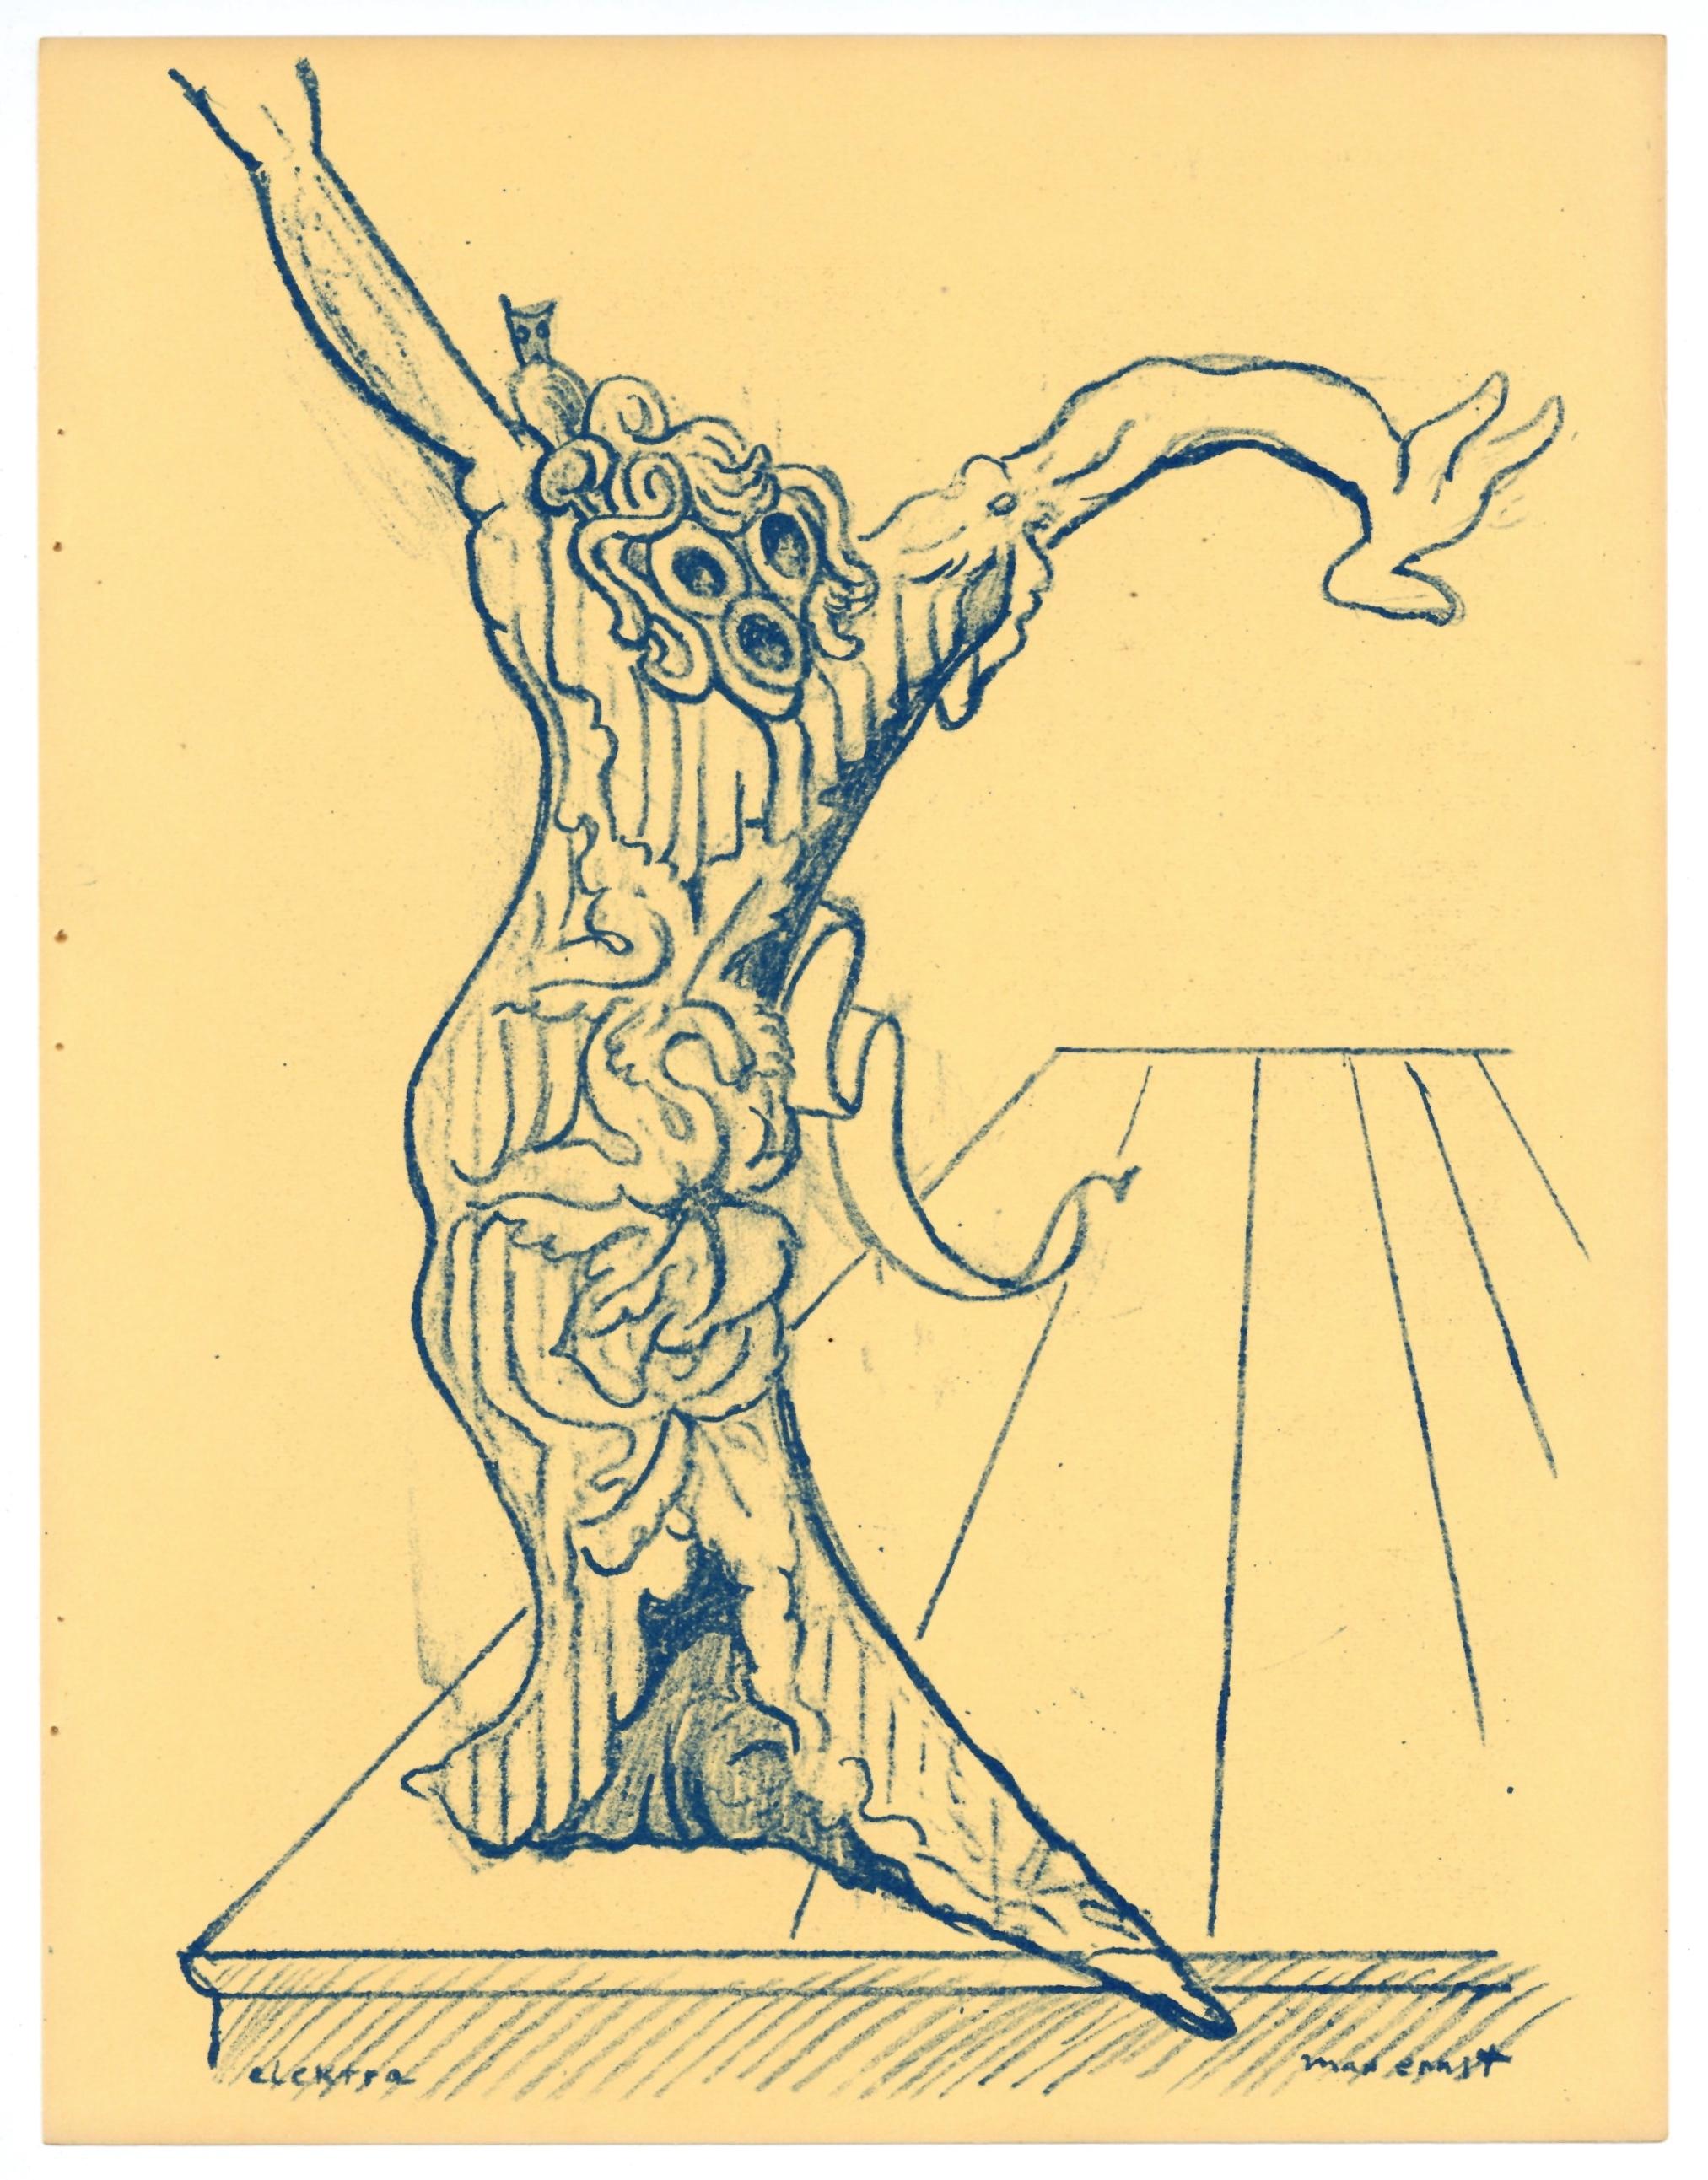 "Elektra" original lithograph - Print by Max Ernst